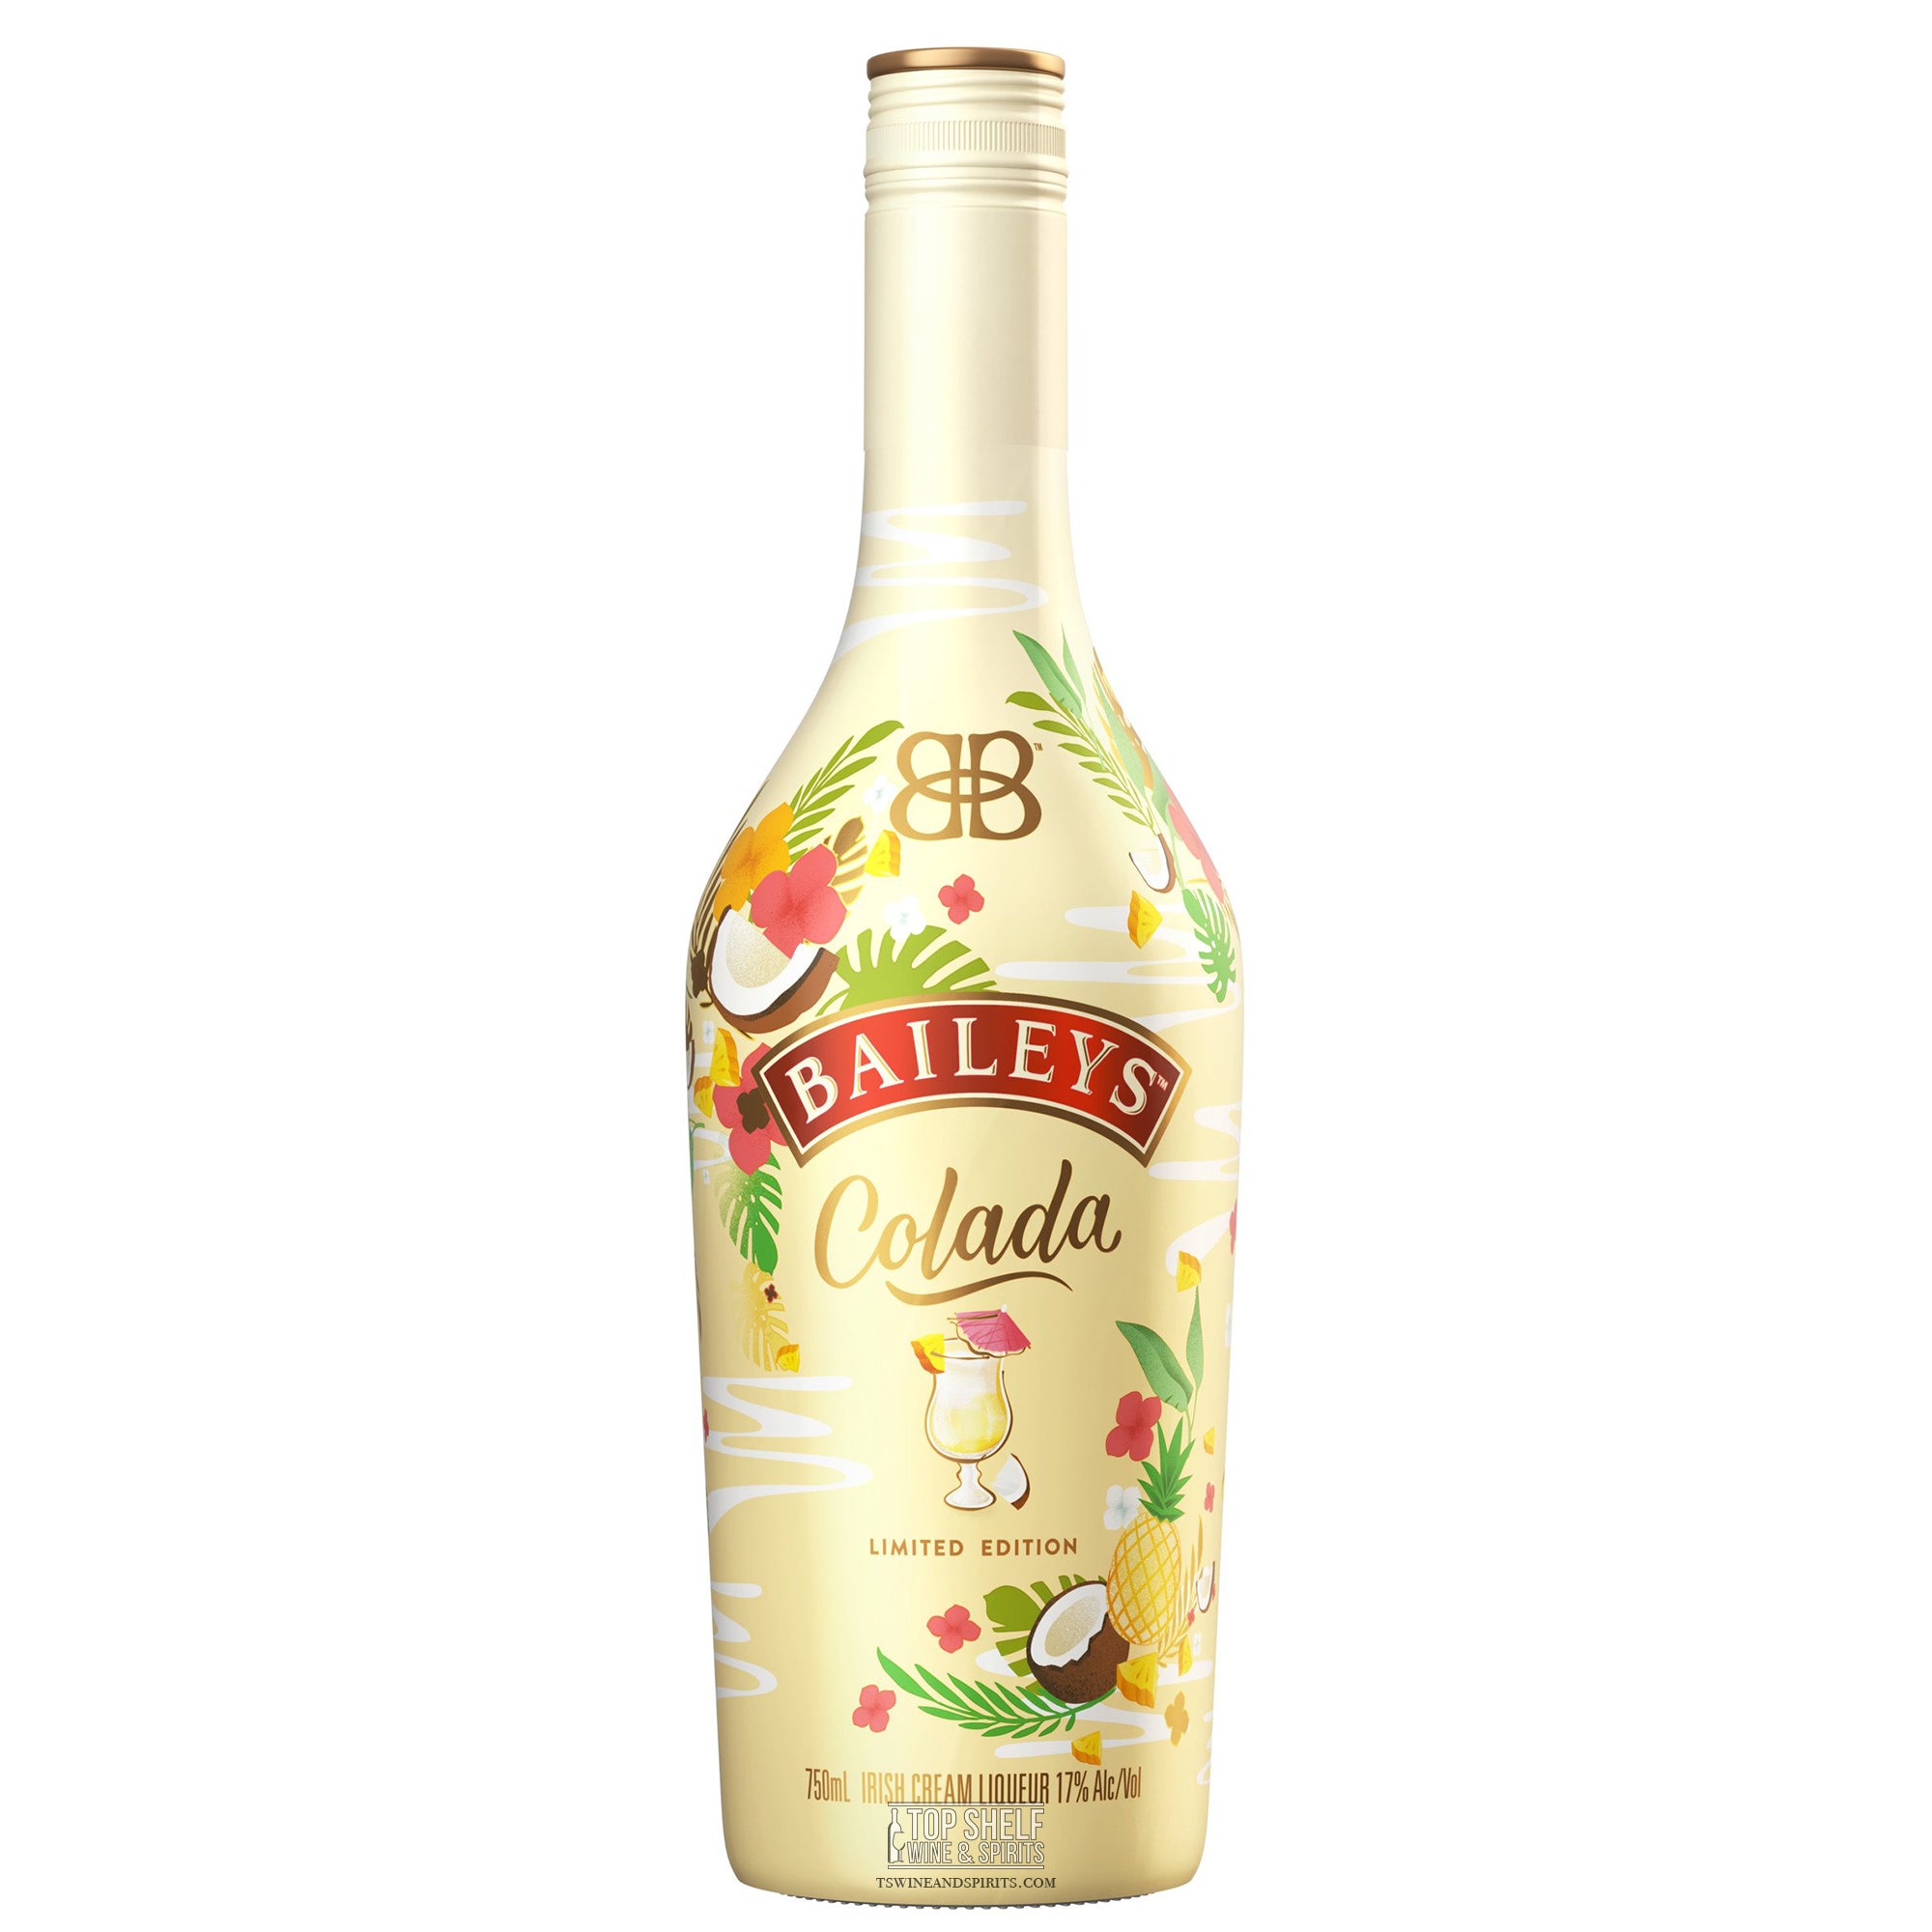 Baileys Colada Limited Edition Irish Cream